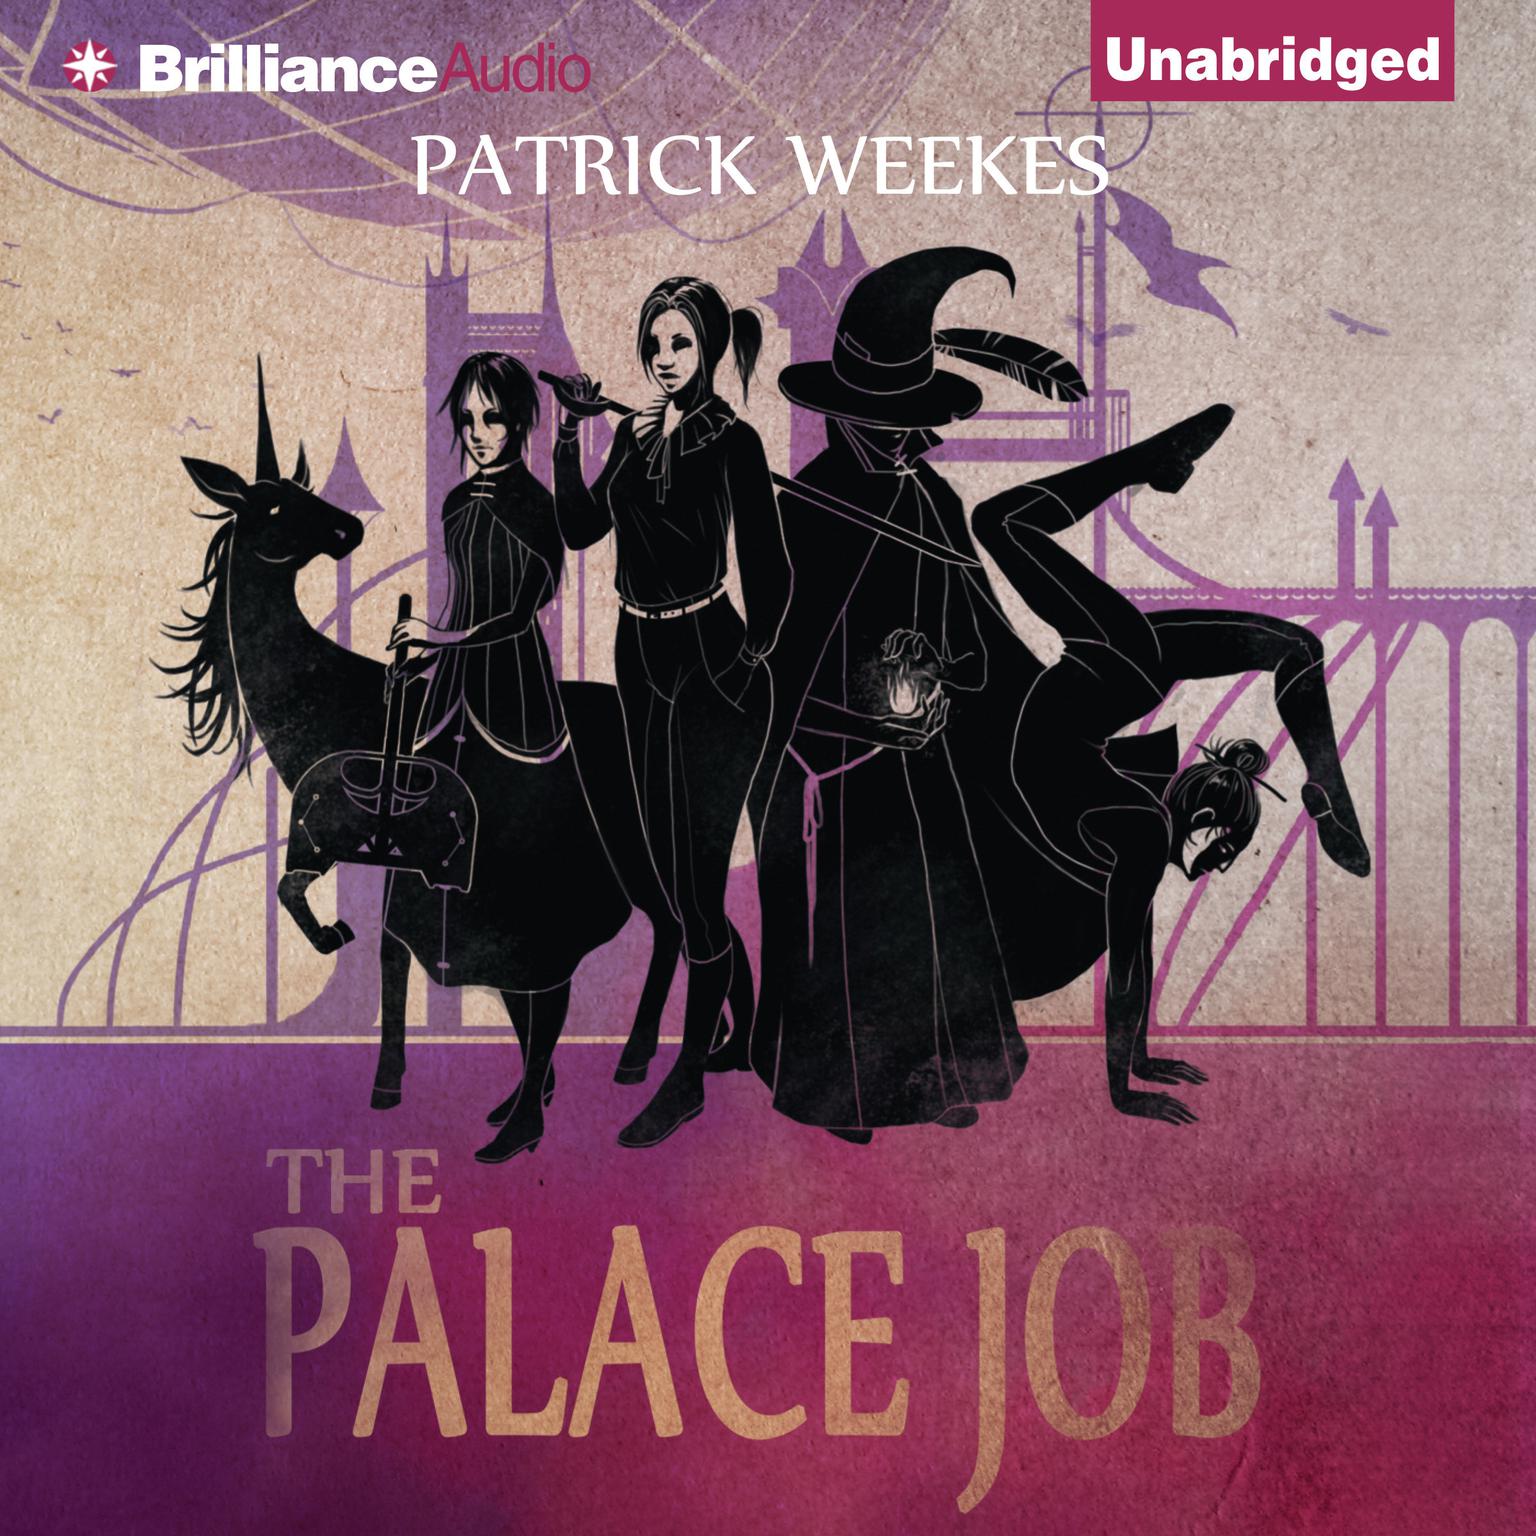 The Palace Job Audiobook, by Patrick Weekes